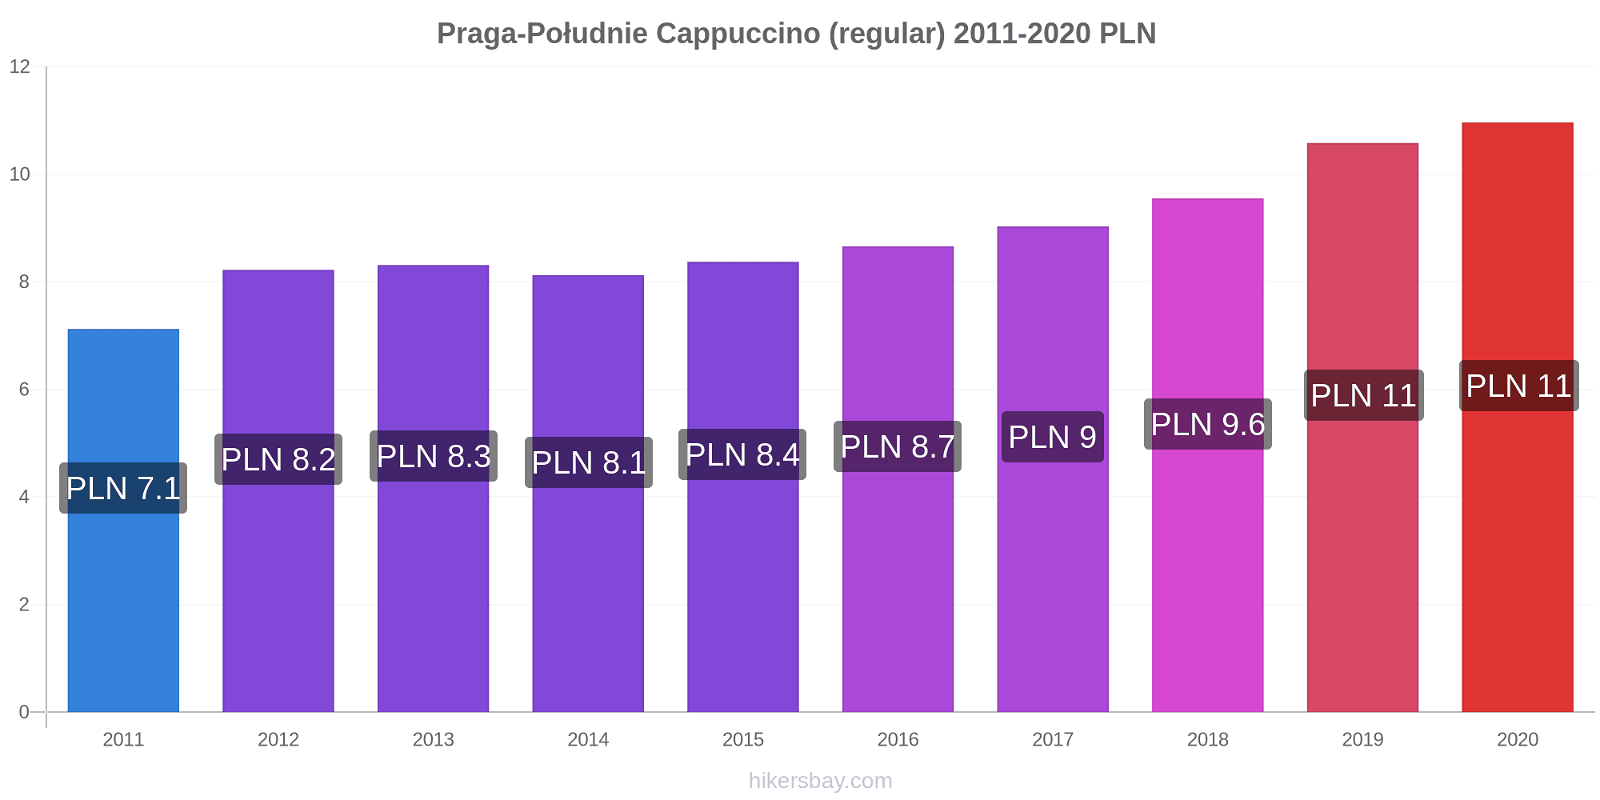 Praga-Południe price changes Cappuccino (regular) hikersbay.com